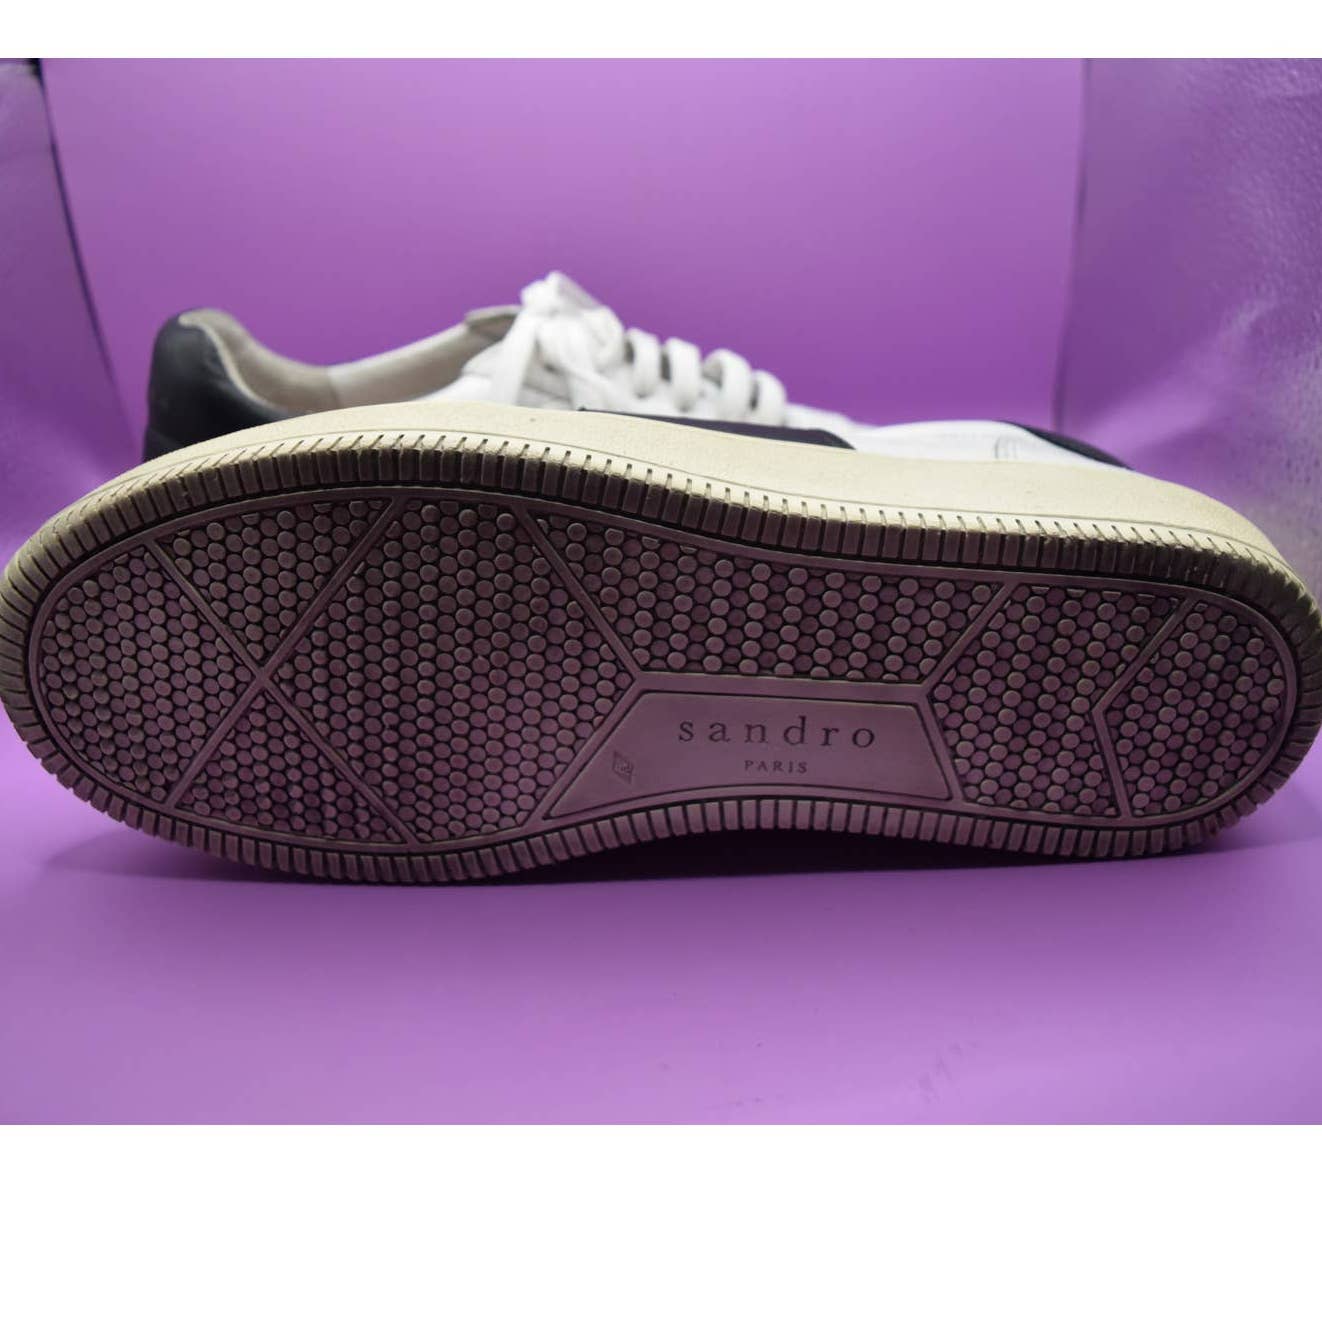 Sandro Paris White Black Trainers Sneakers Tennis Shoes - 42 / 9